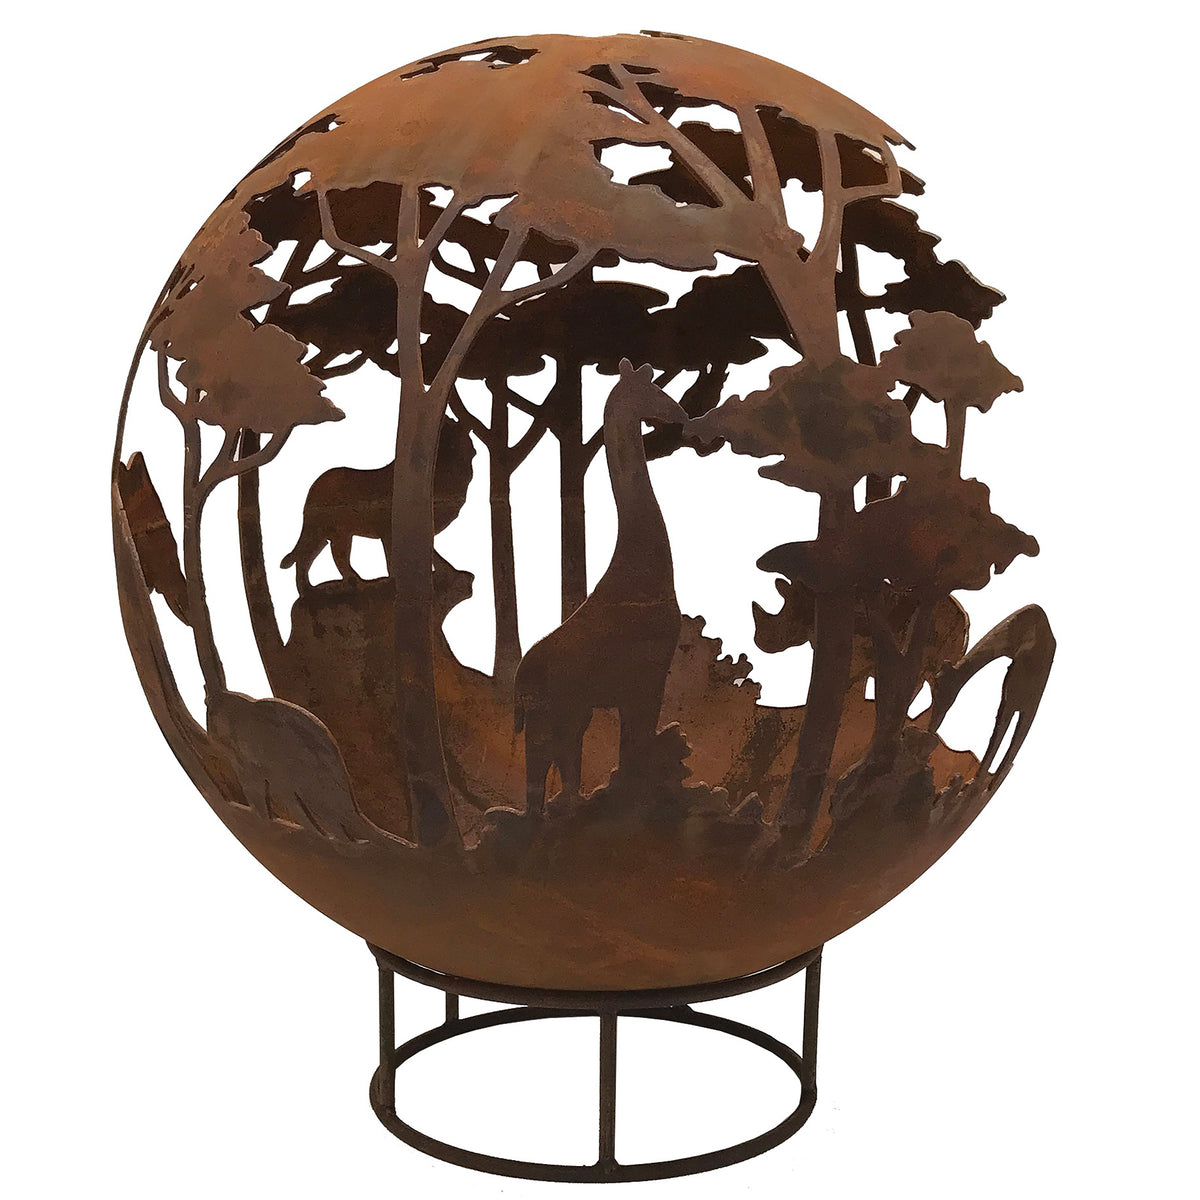 Garden Fire Ball 70cm Safari Design with Rust Finish